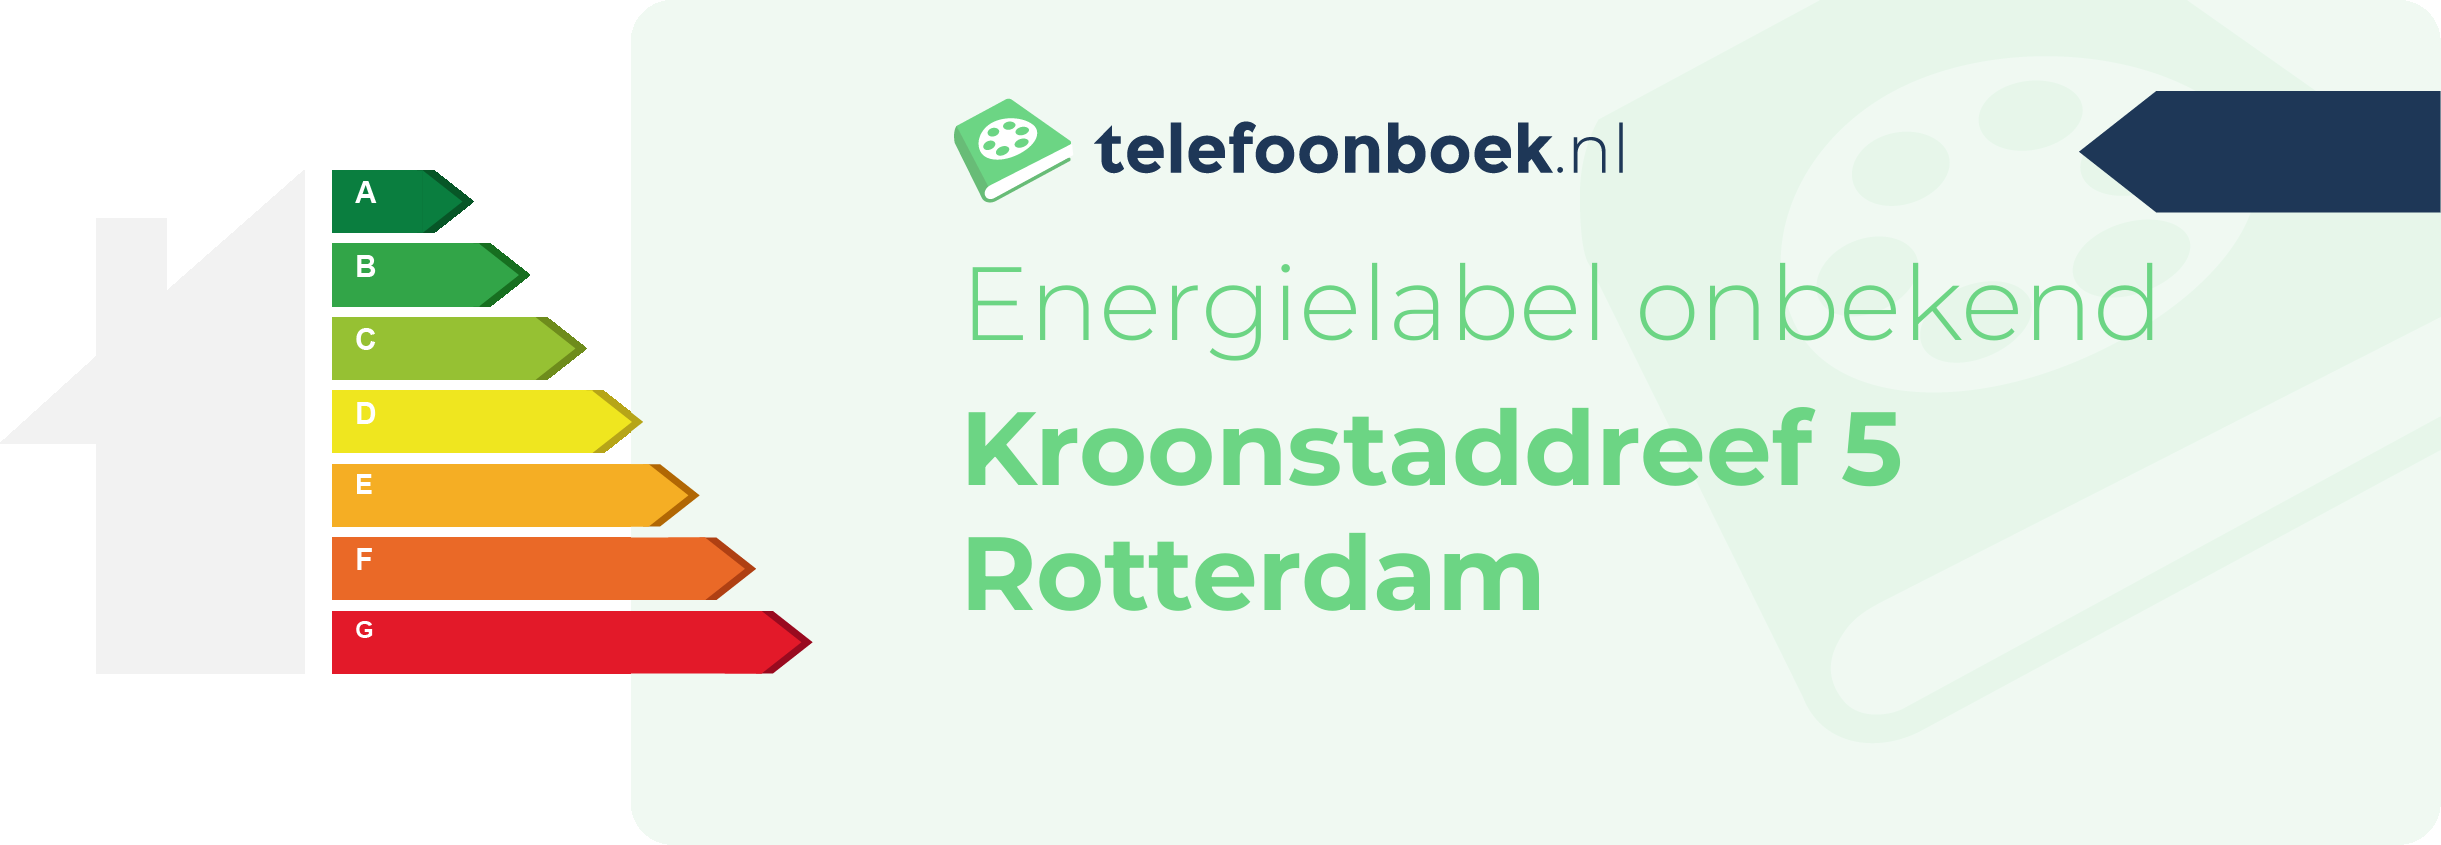 Energielabel Kroonstaddreef 5 Rotterdam